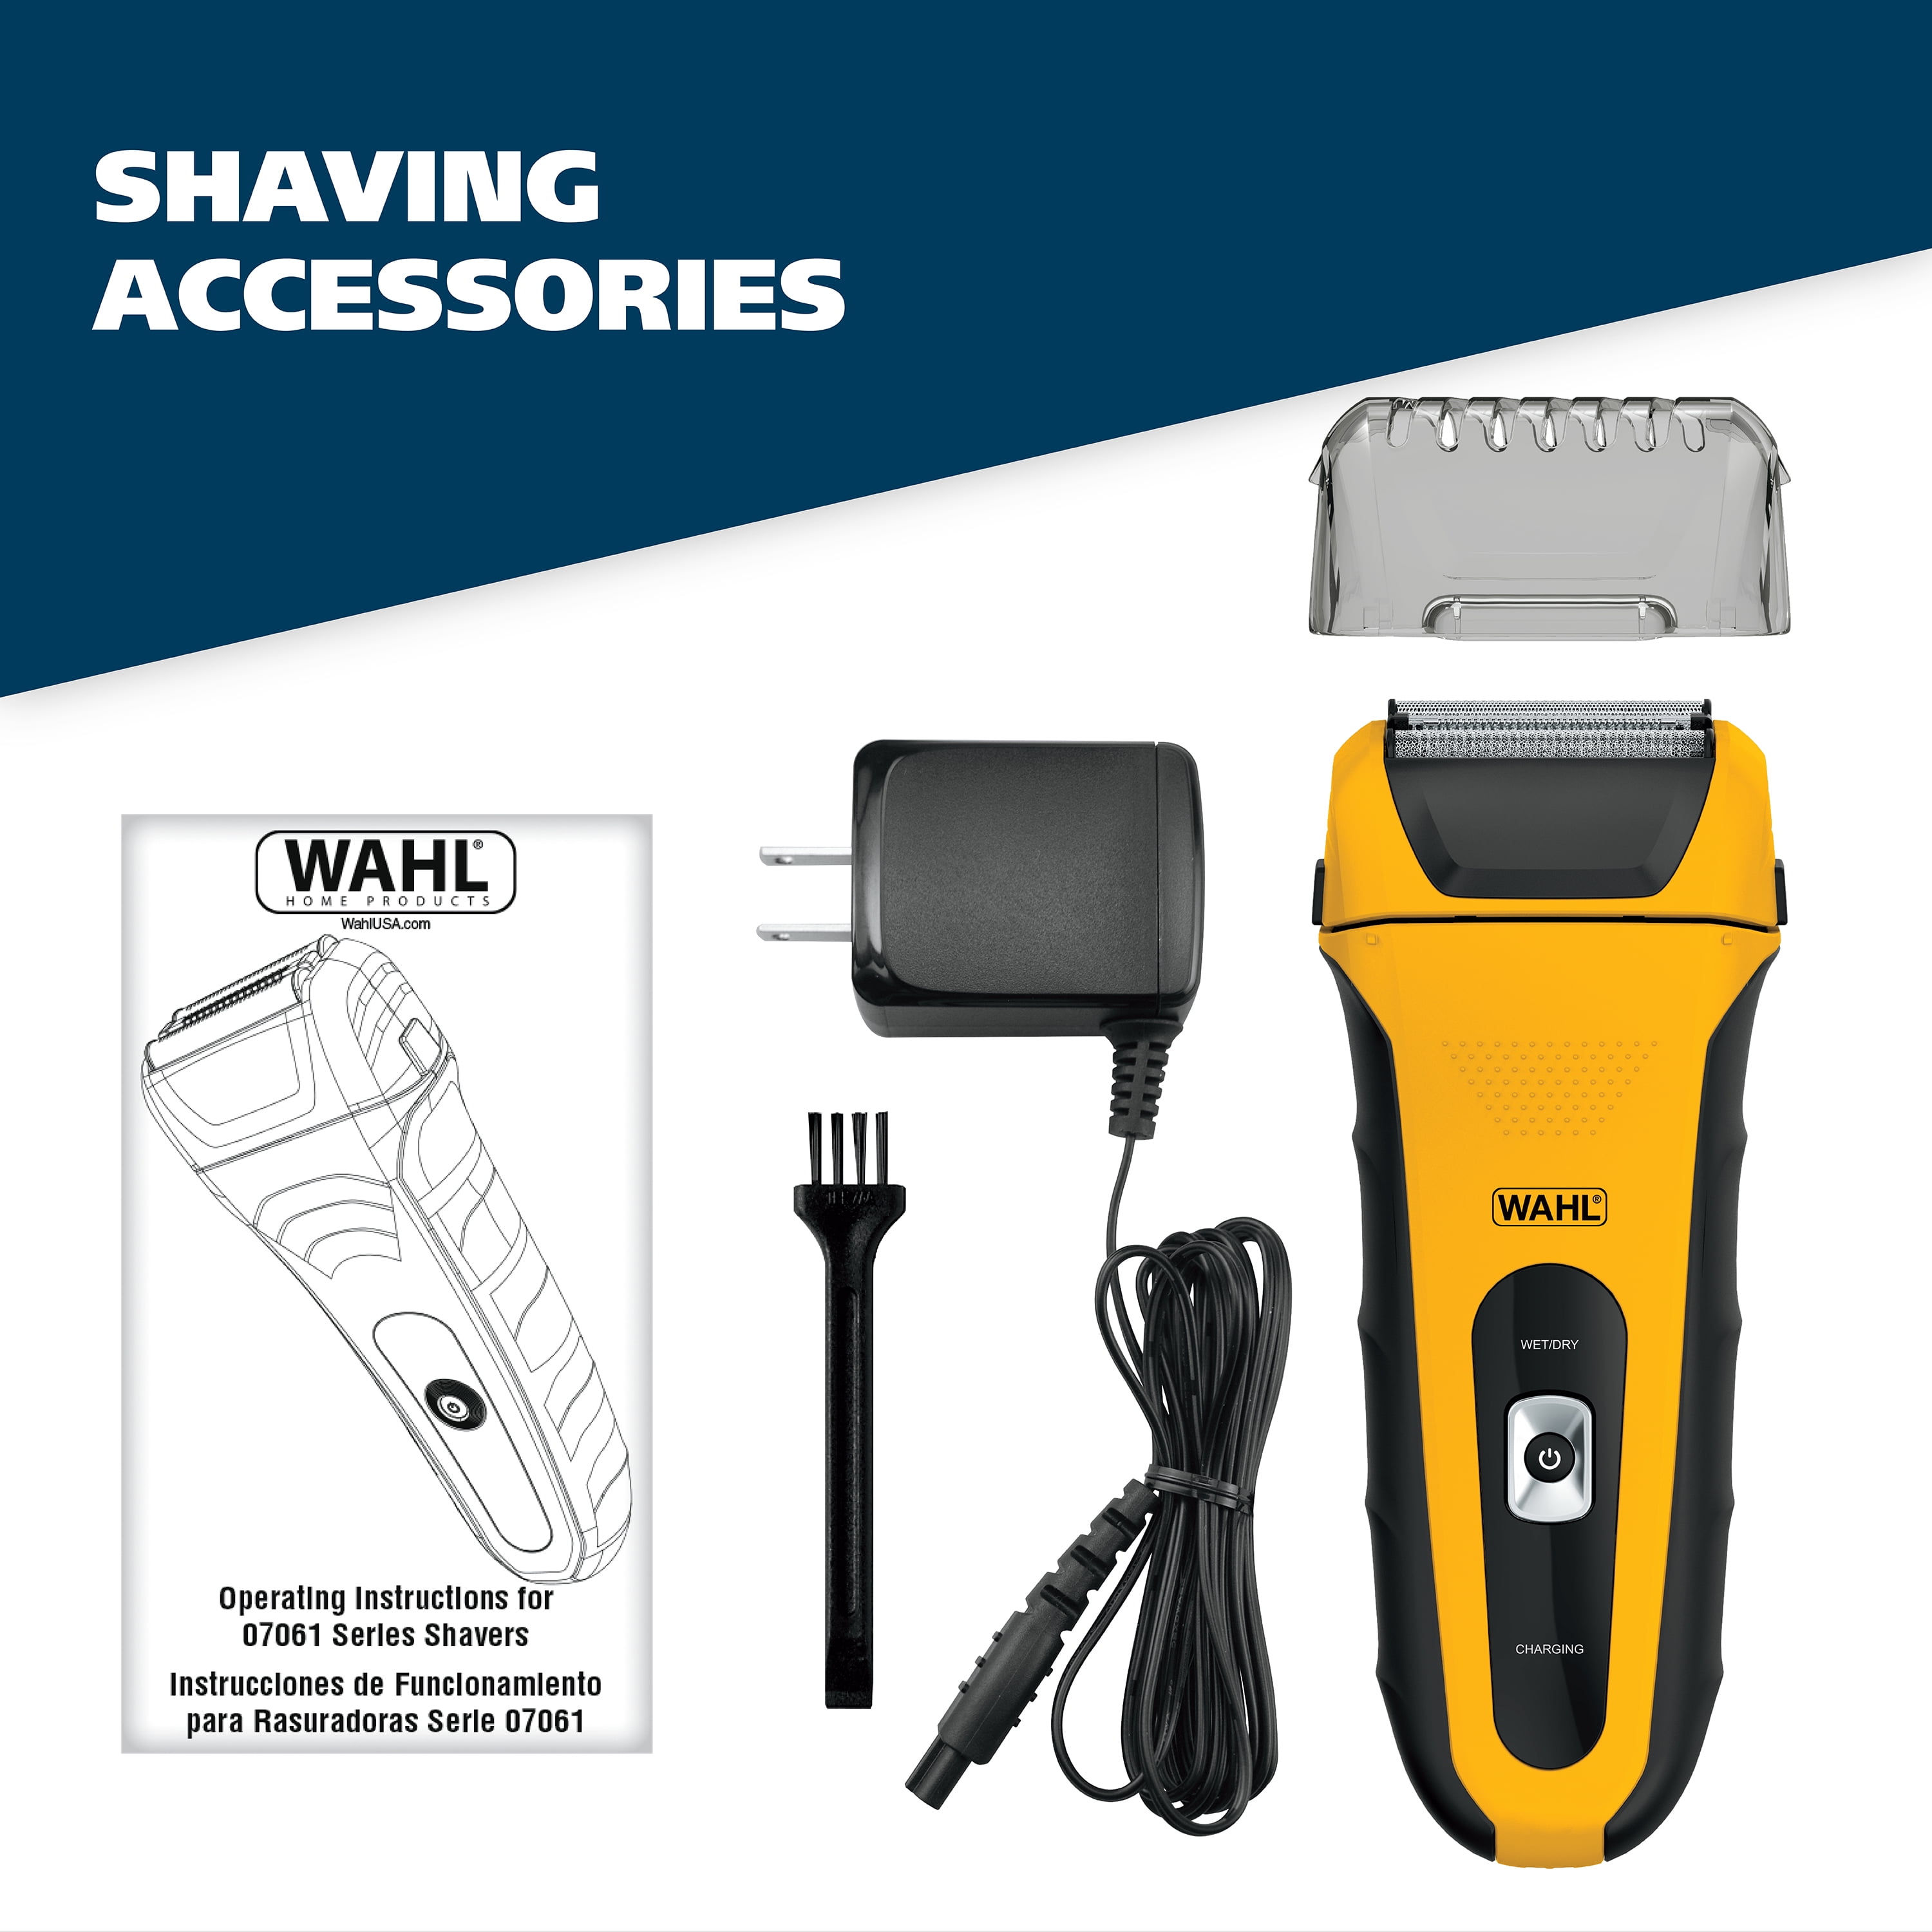 Wahl Groomsman Electric Shaver Rechargeable Wet/Dry Waterproof